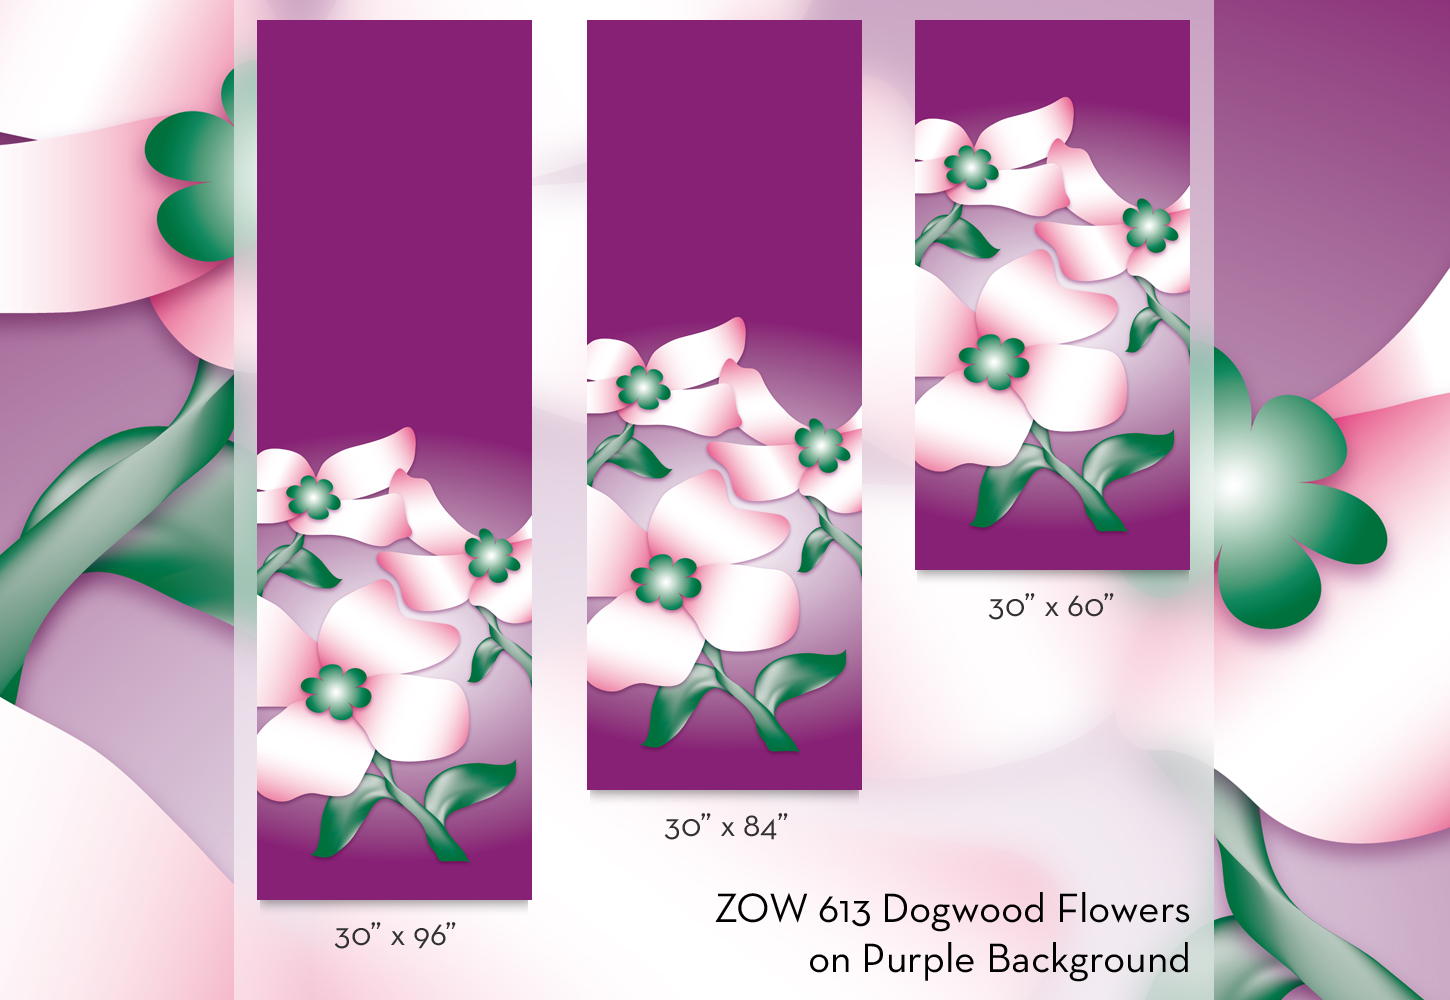 ZOW 613 Dogwood Flowers on Purple Background